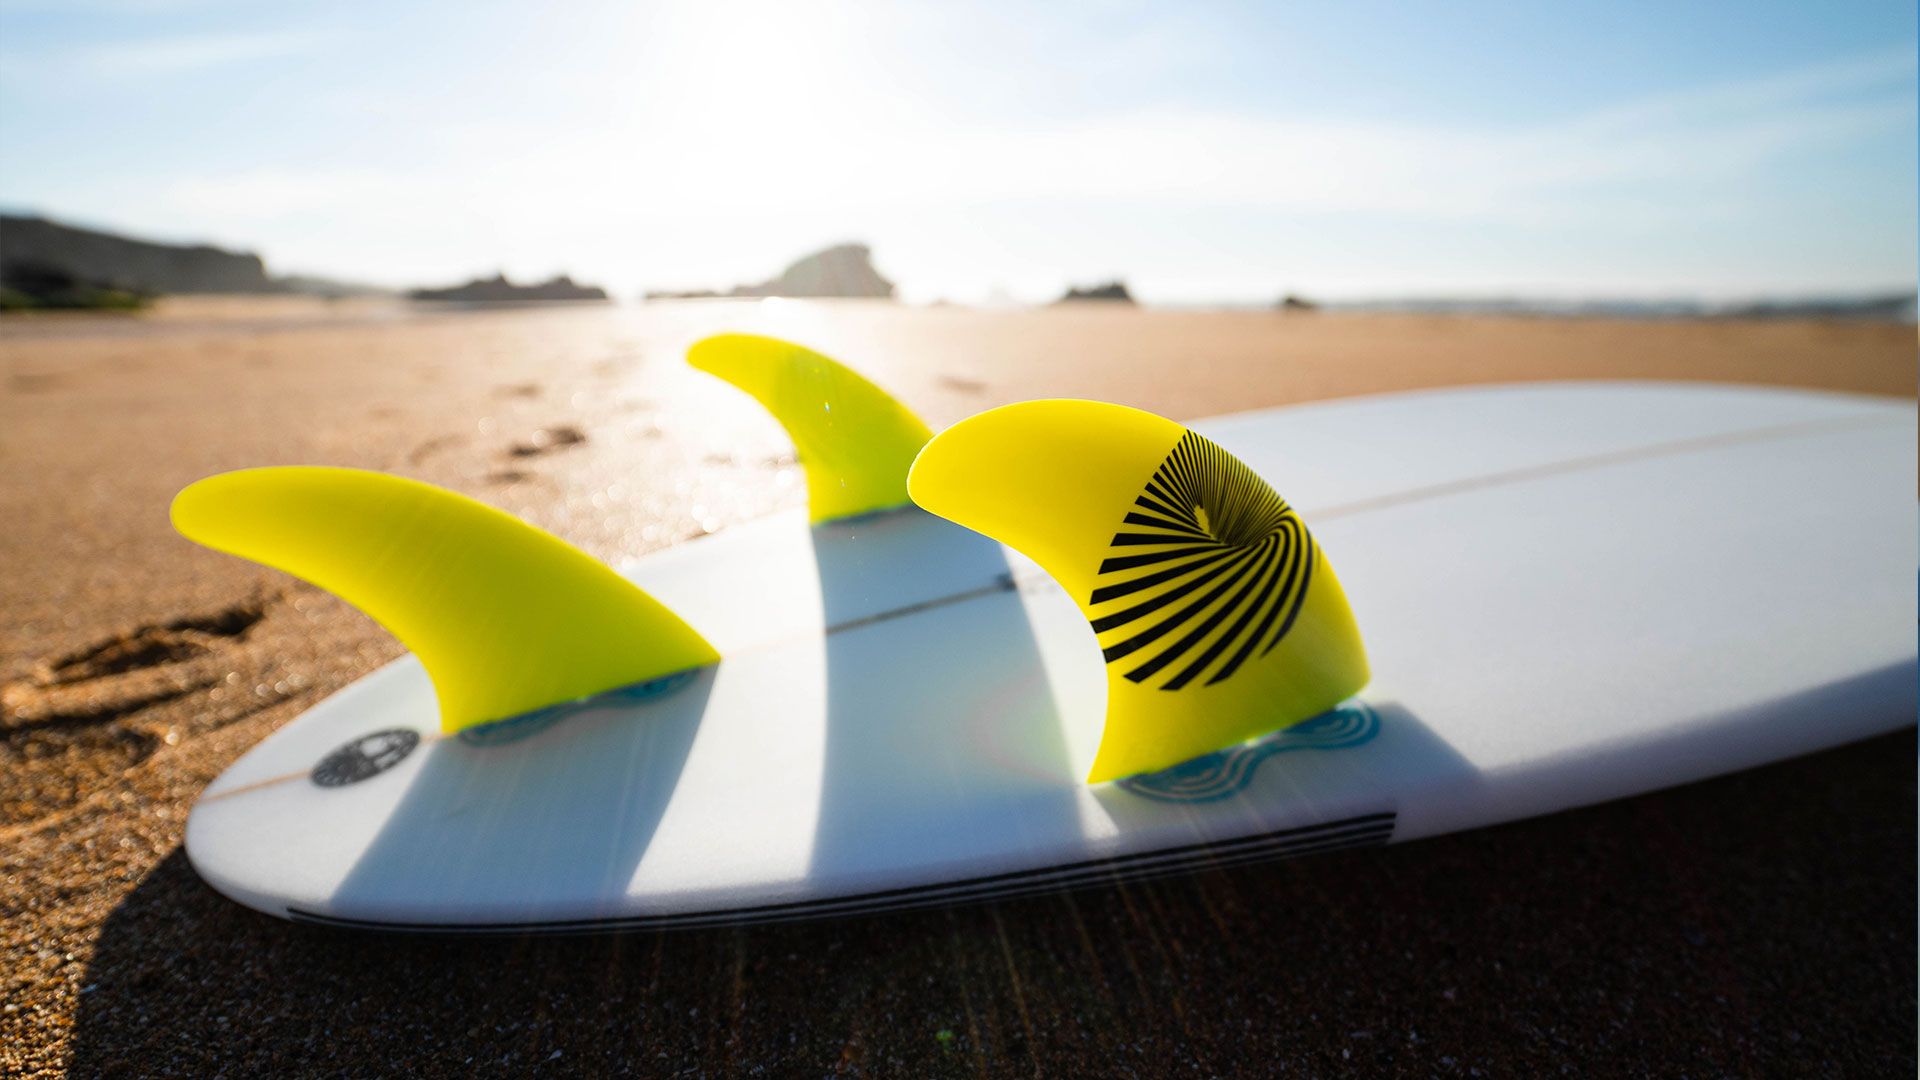 Quillas de surf amarillas fcs compatibles de la marca e8 fin system